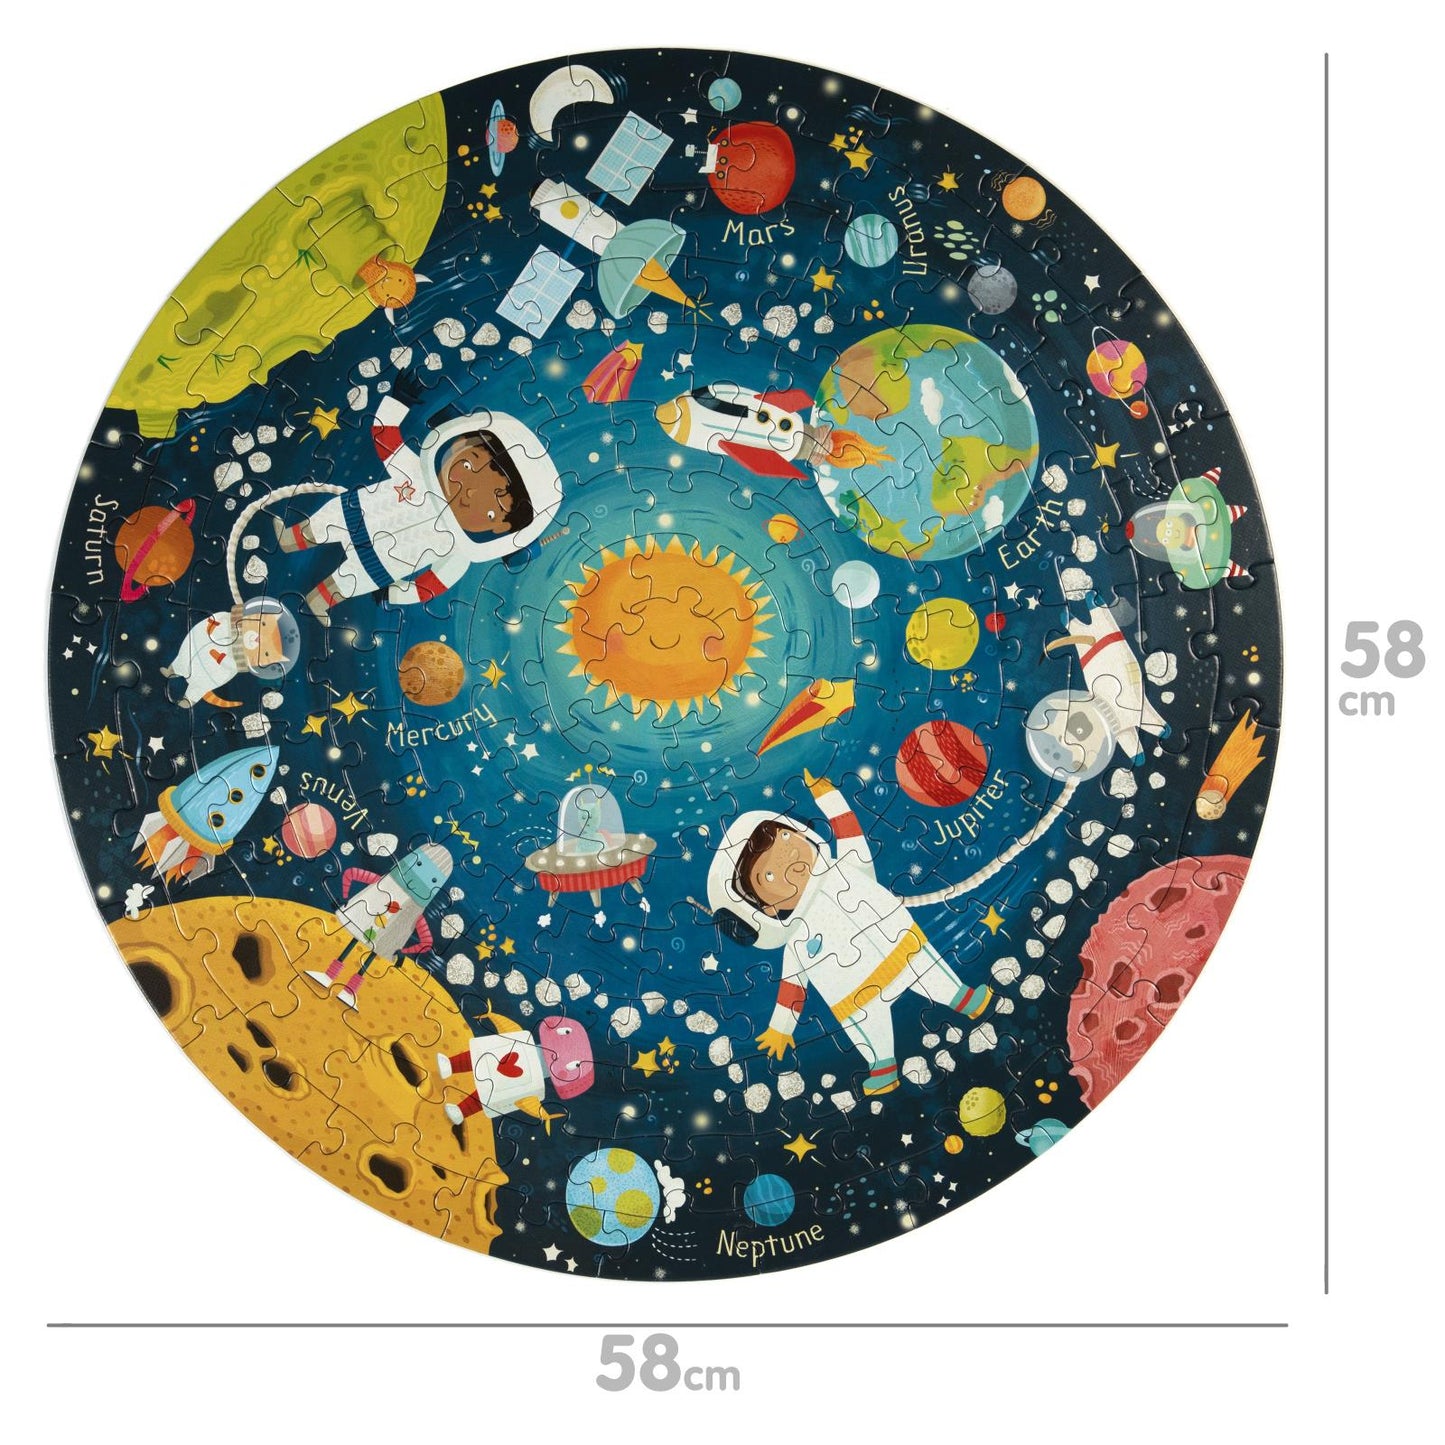 Boppi Round Jigsaw - 150 Pieces - Space